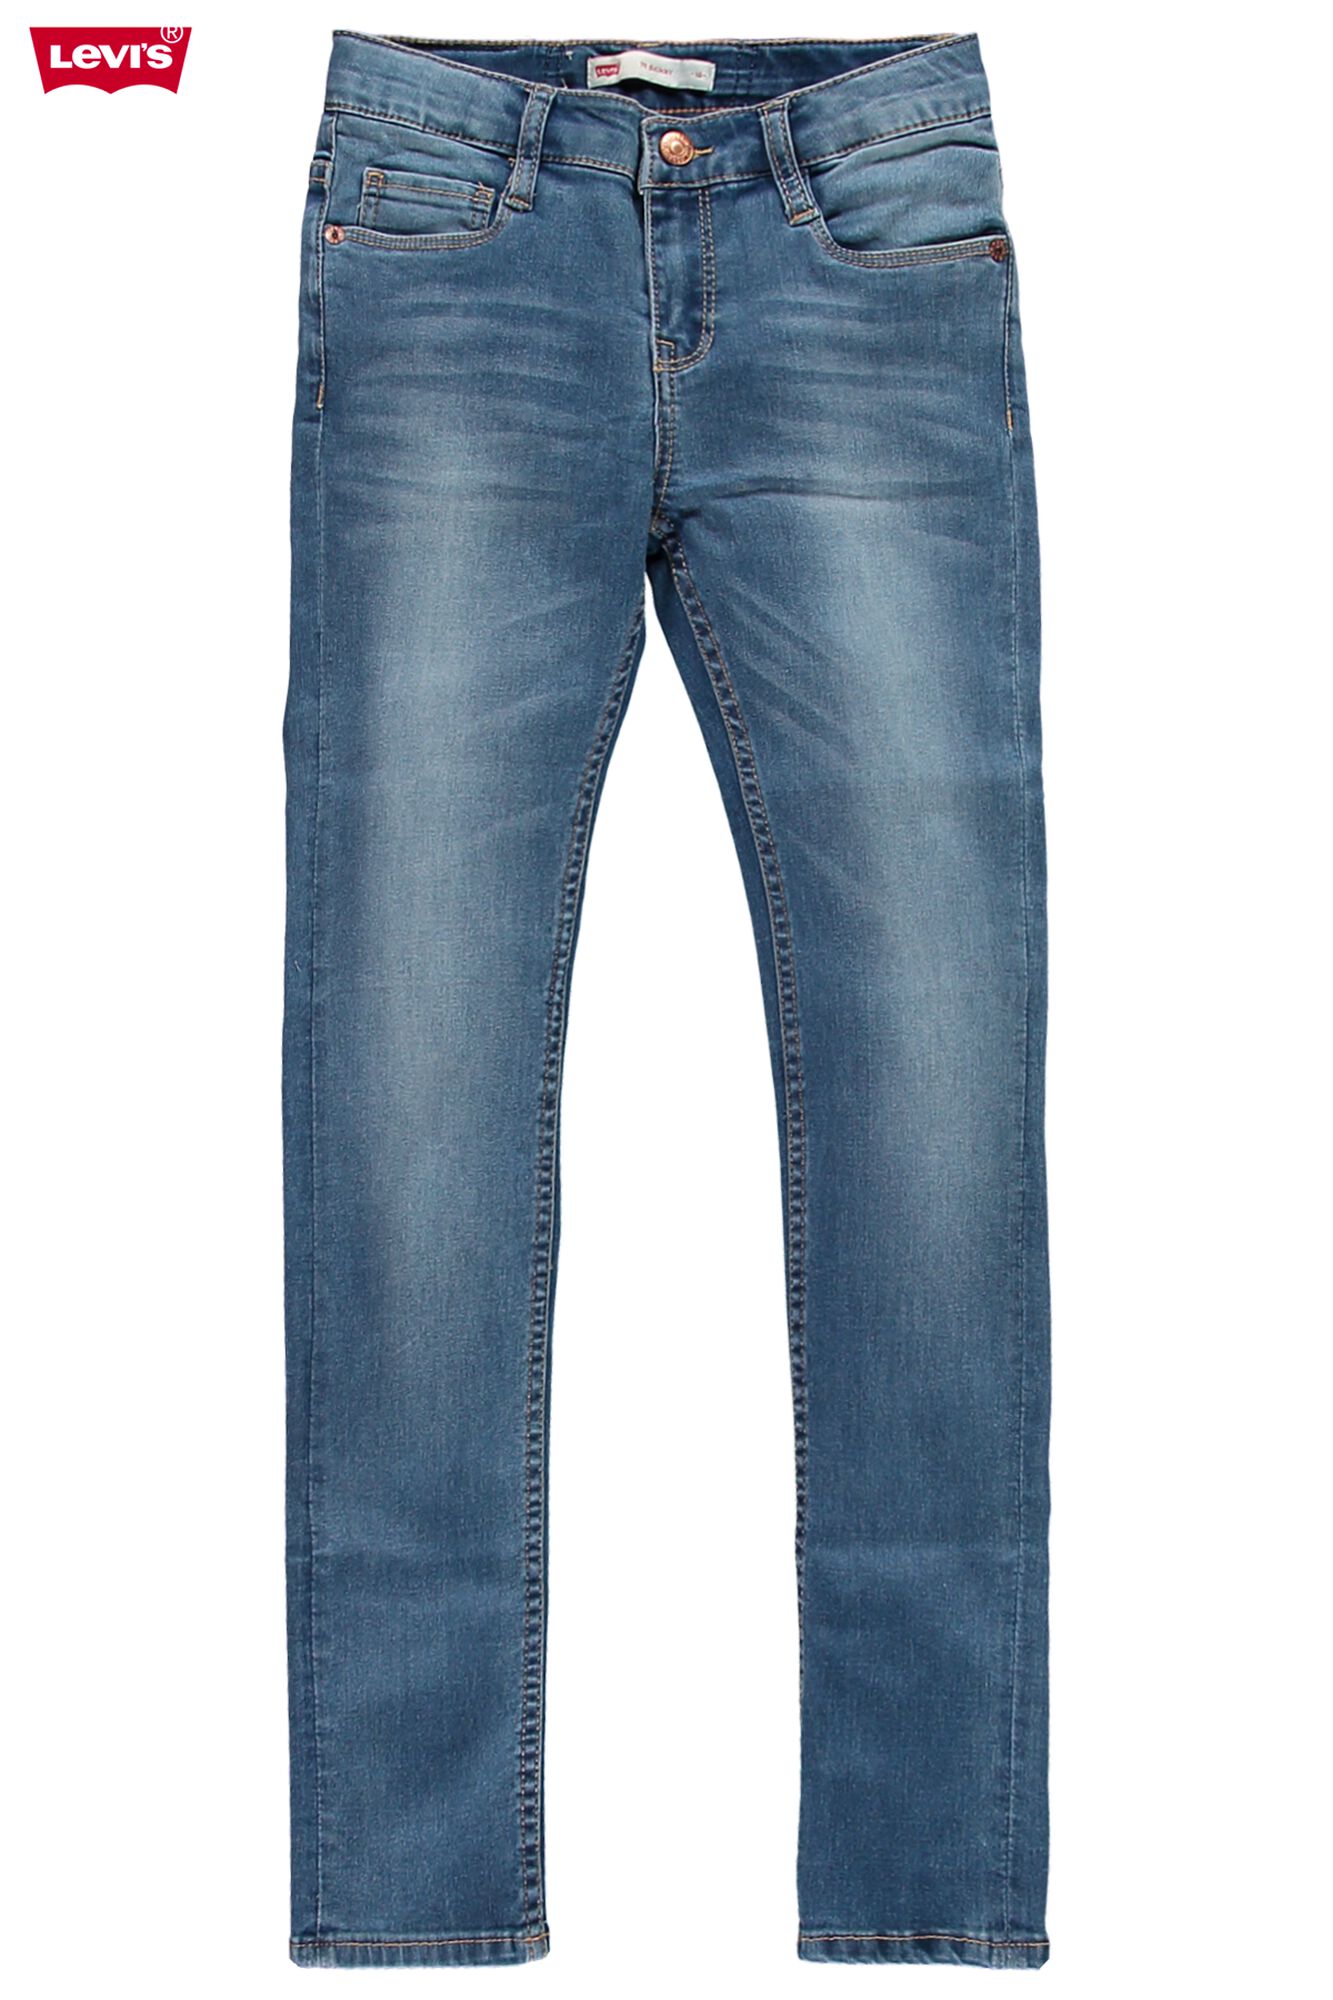 Girls Jeans 711 Levi's Skinny Blue Buy Online